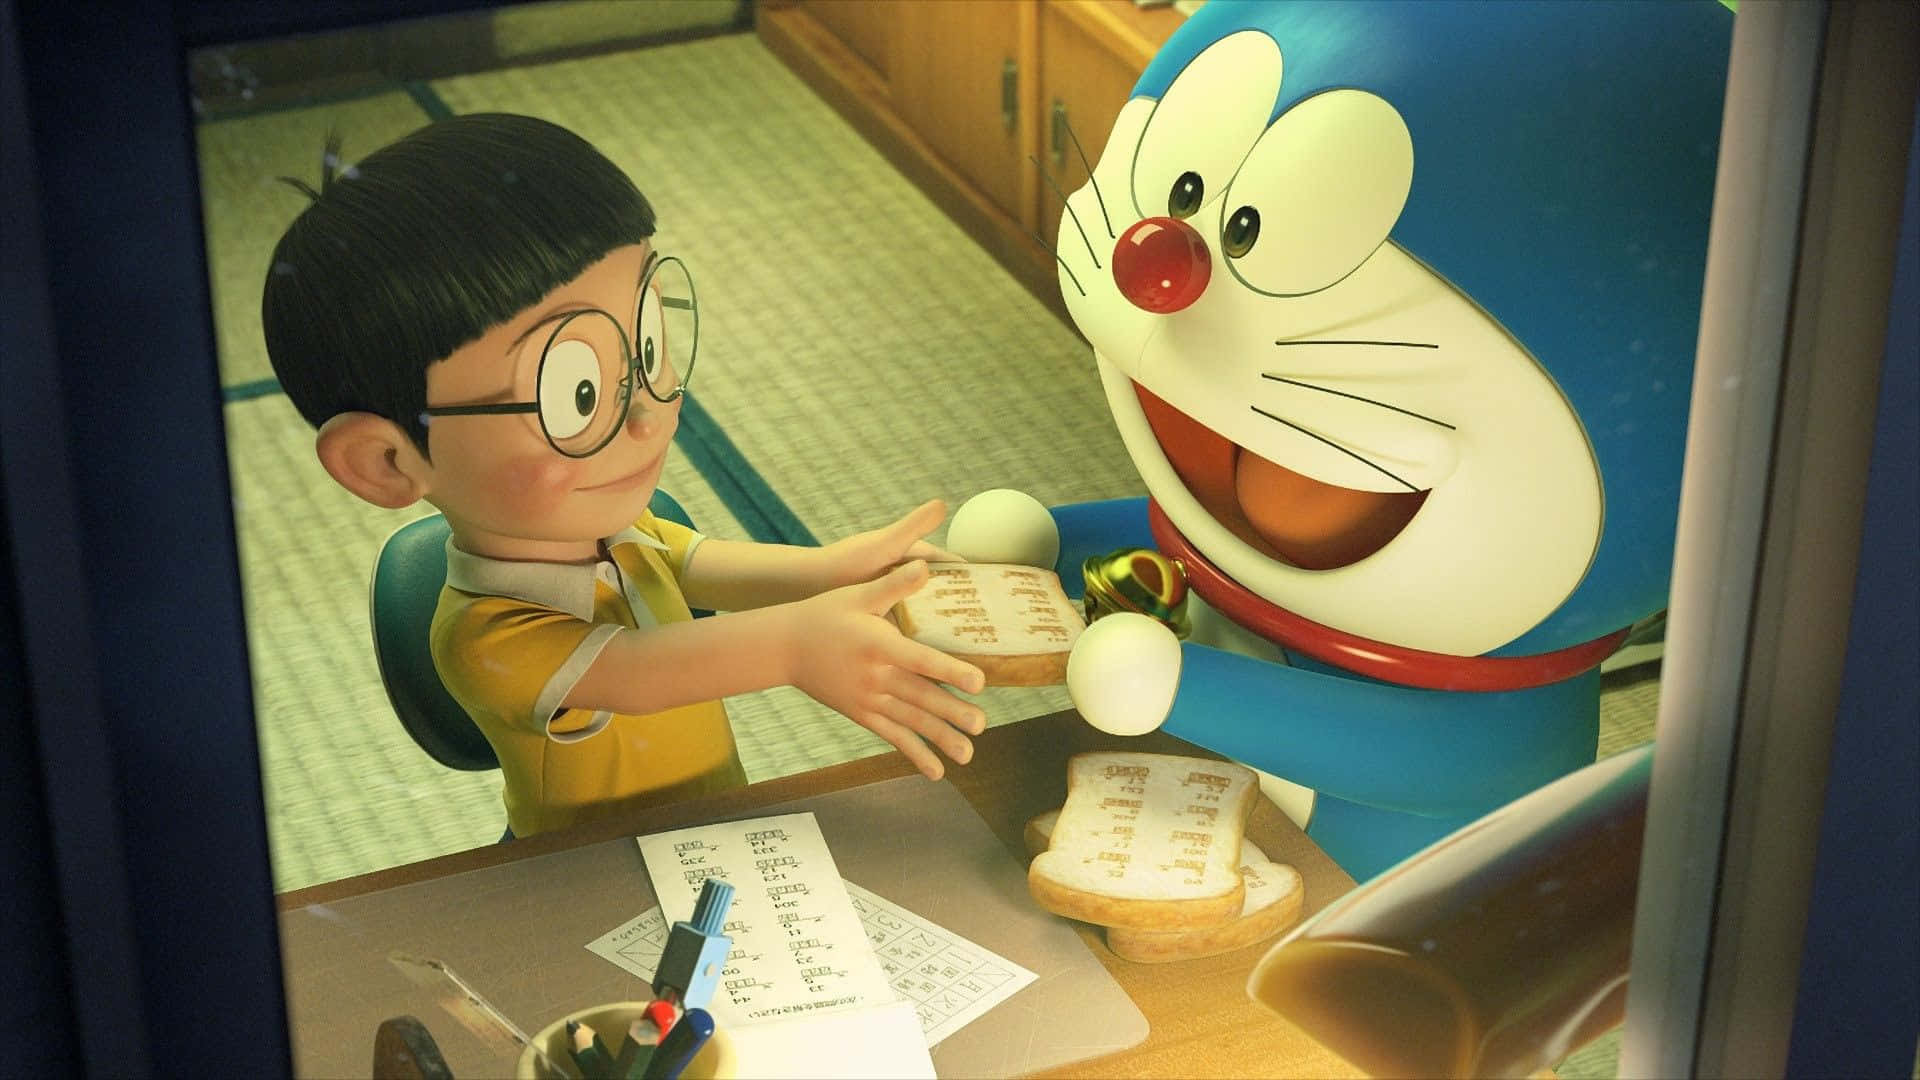 Doraemon is happy, as always!